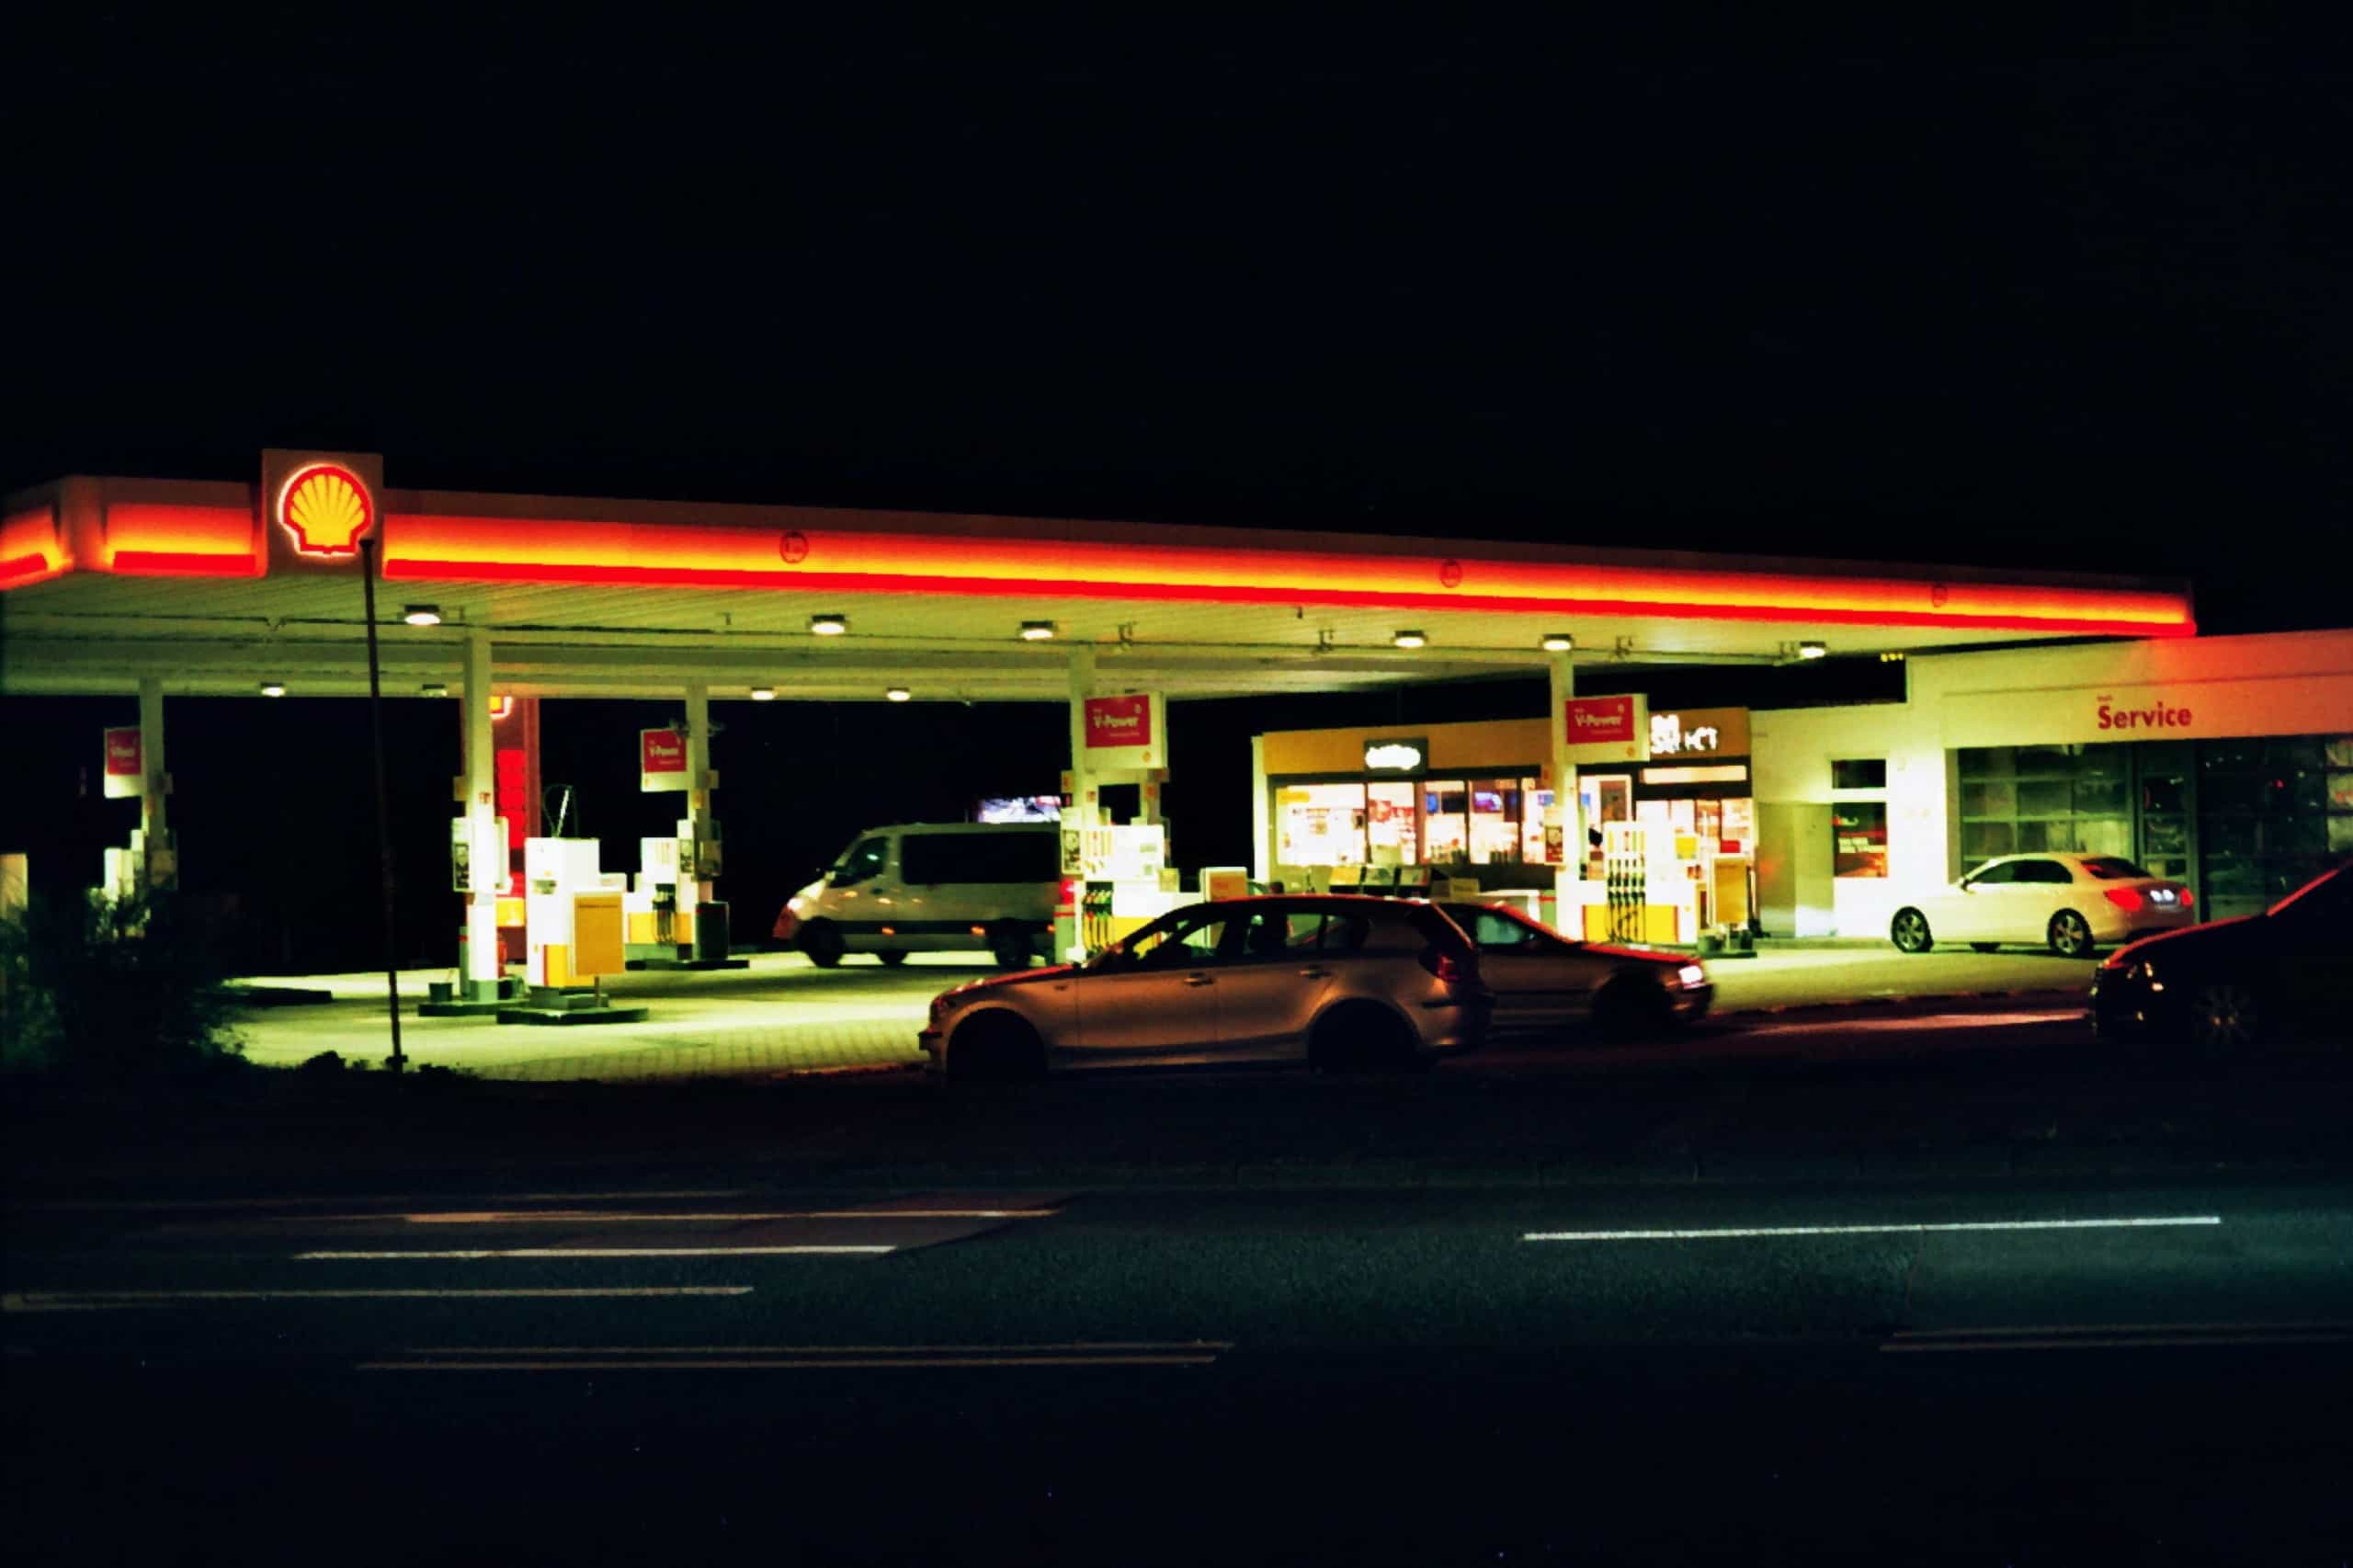 Fuel station